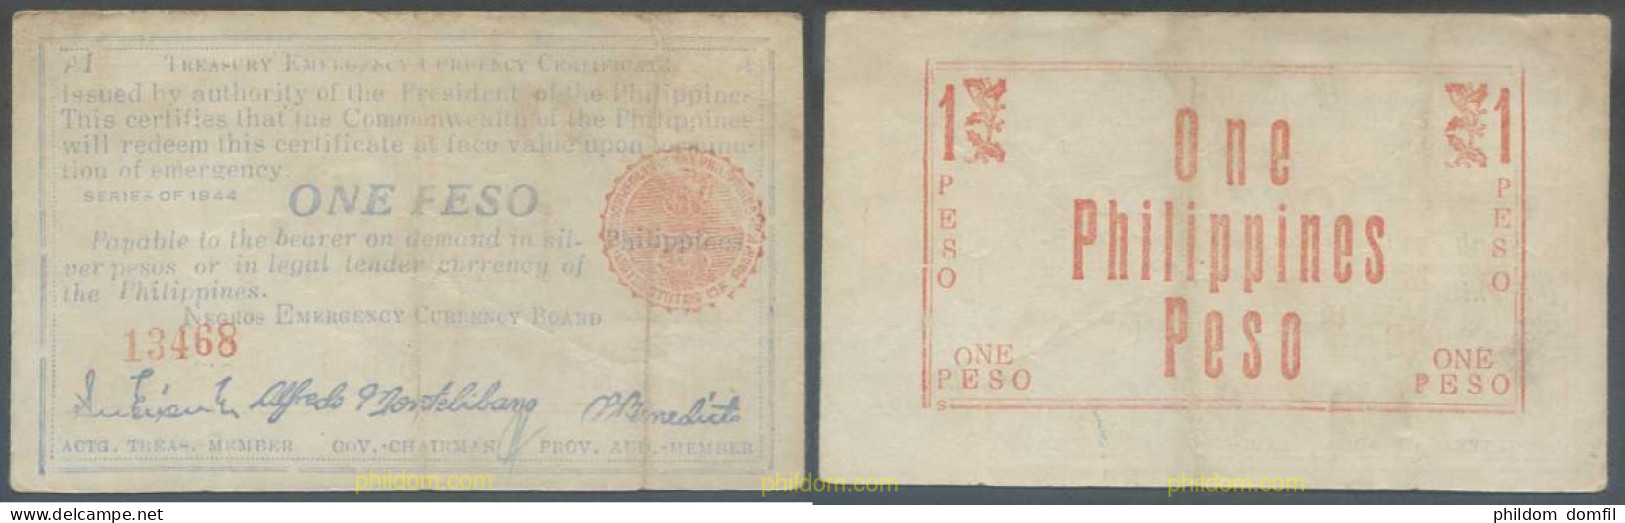 5894 FILIPINAS 1944 PHILIPPINES 1 PESO 1944 - Philippinen